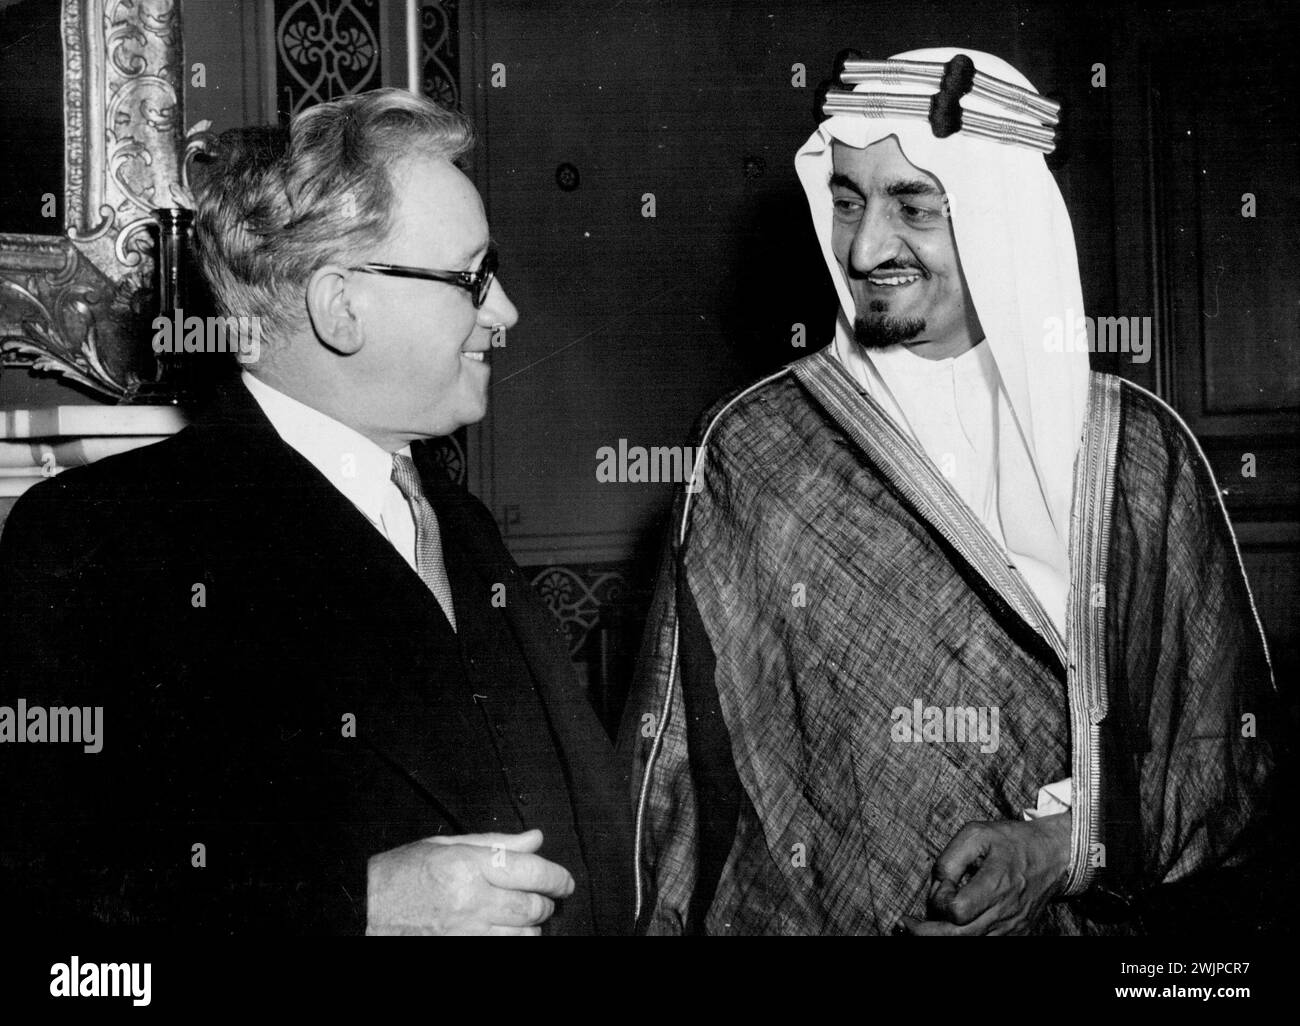 King Faisal Aziz - King of Saudi Arabia - Foreign Royalty. September 13, 1951. Stock Photo